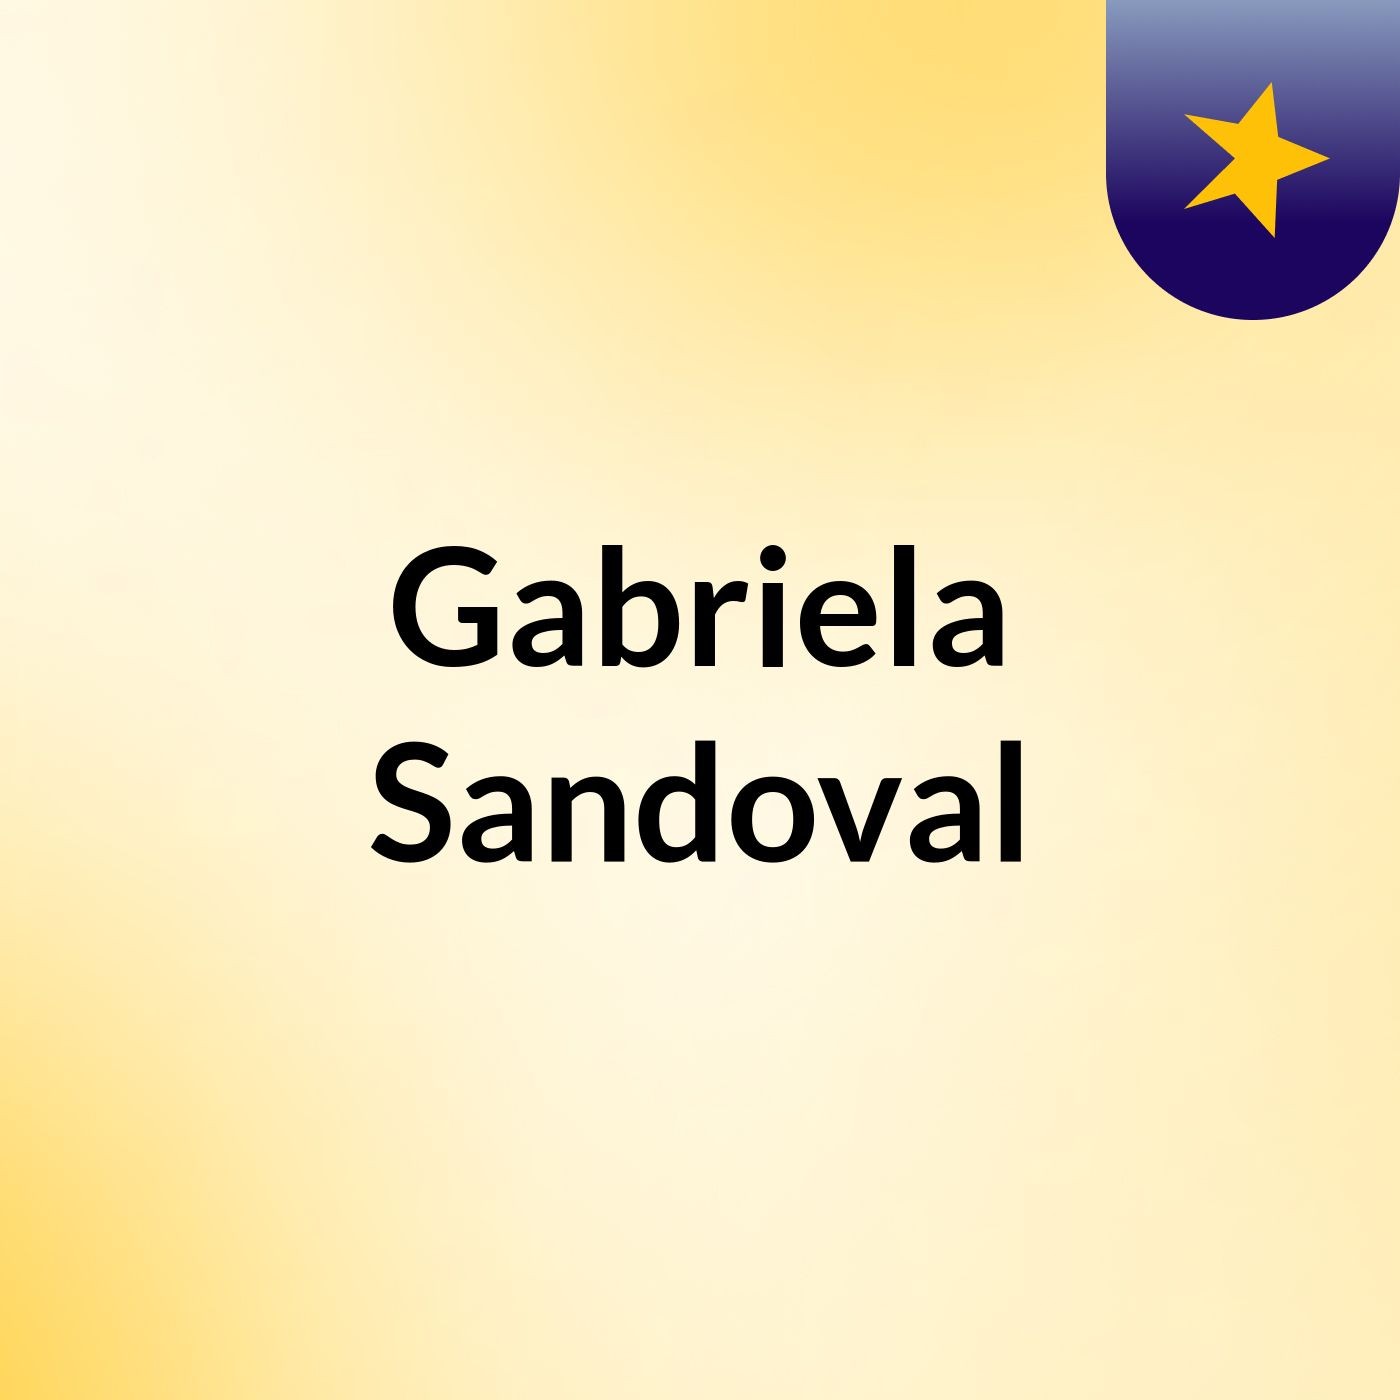 Gabriela Sandoval